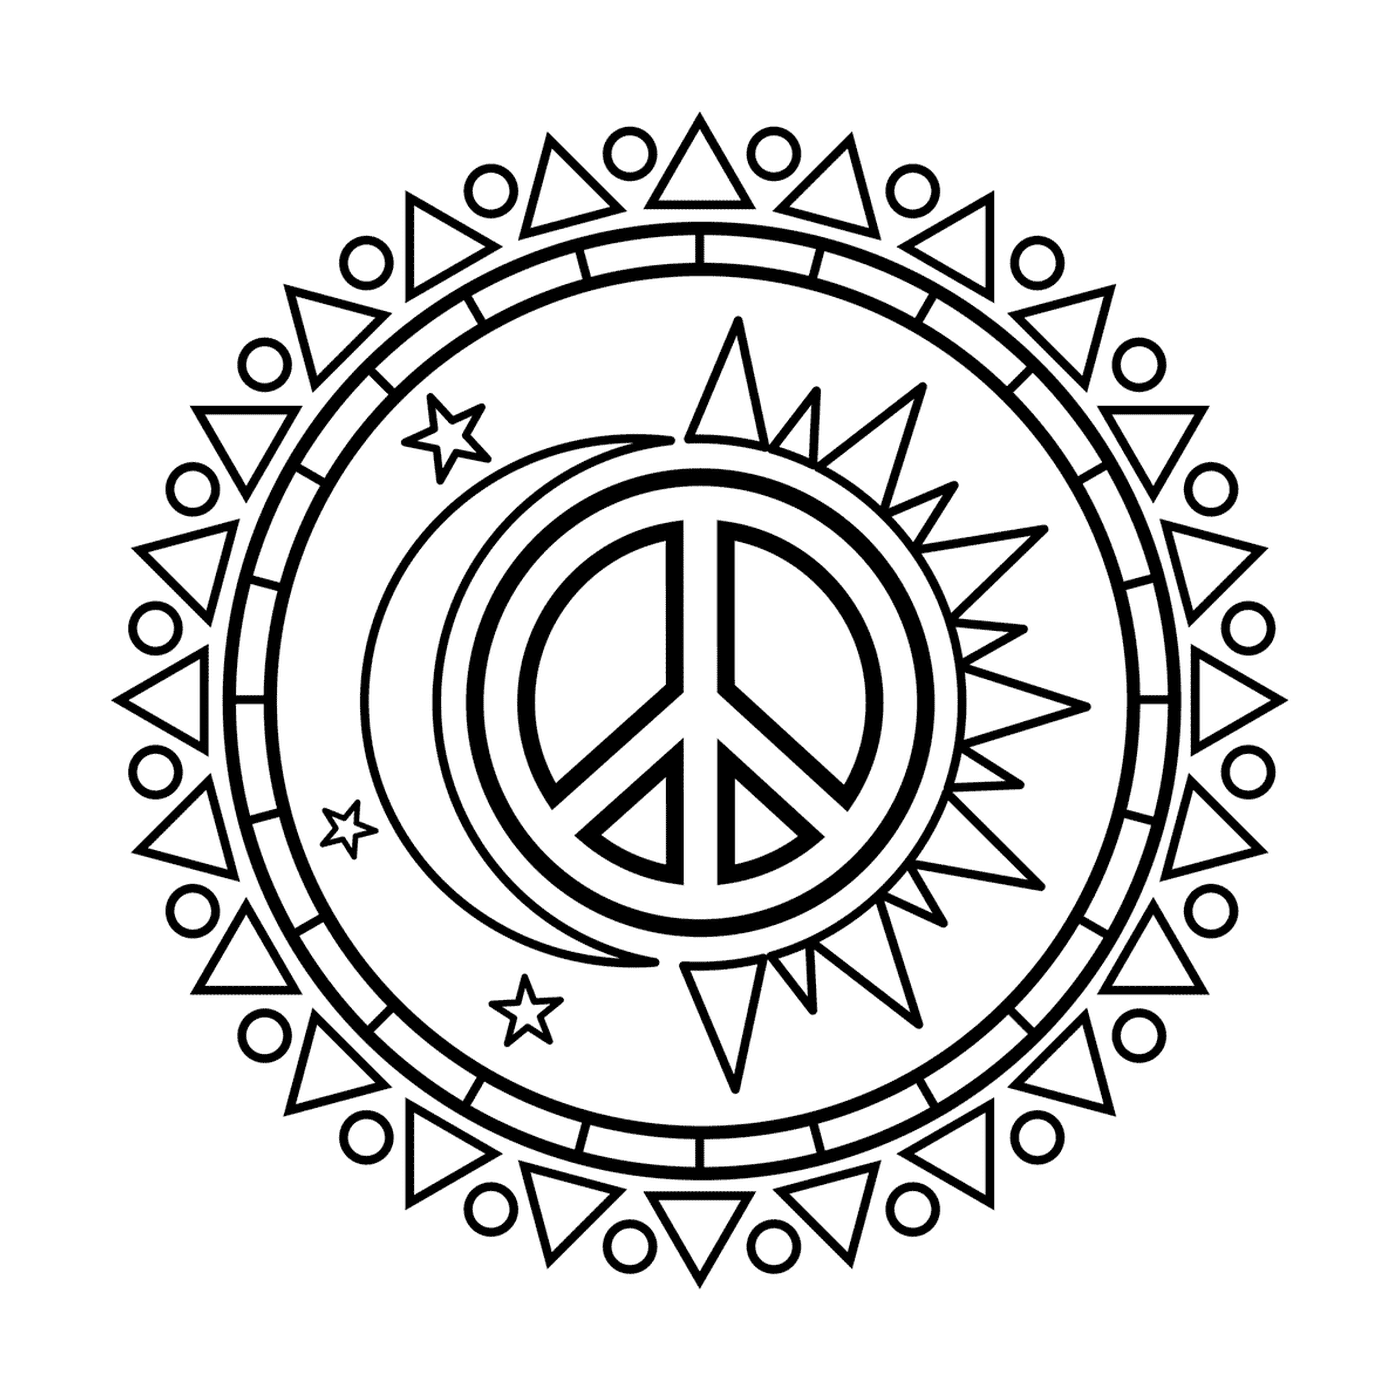  Солнце и луна с символом мира 